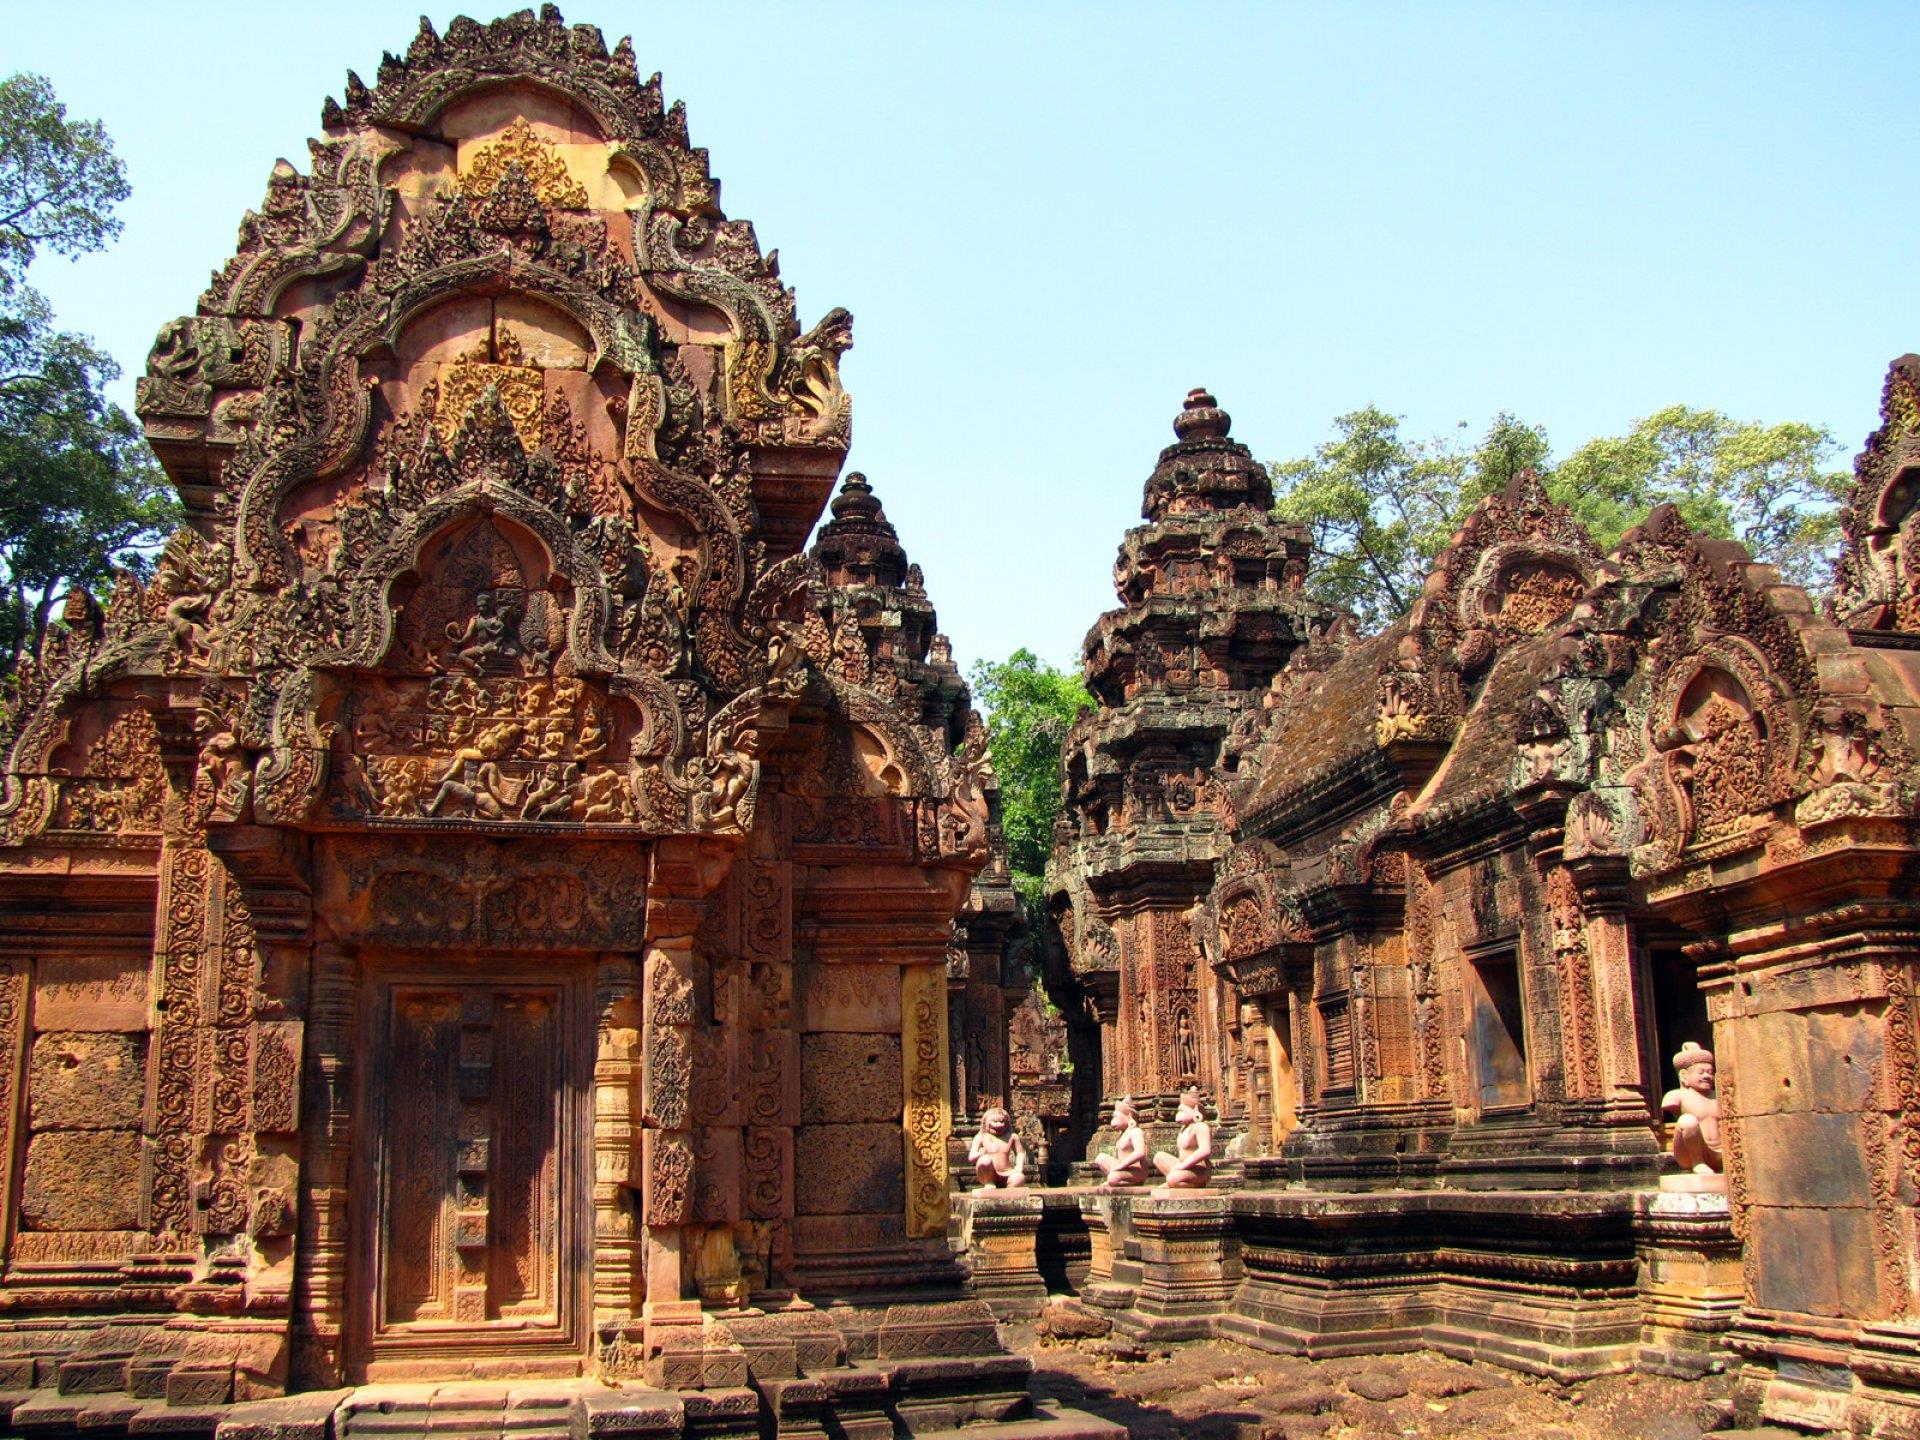 Камбоджа храмы в джунглях